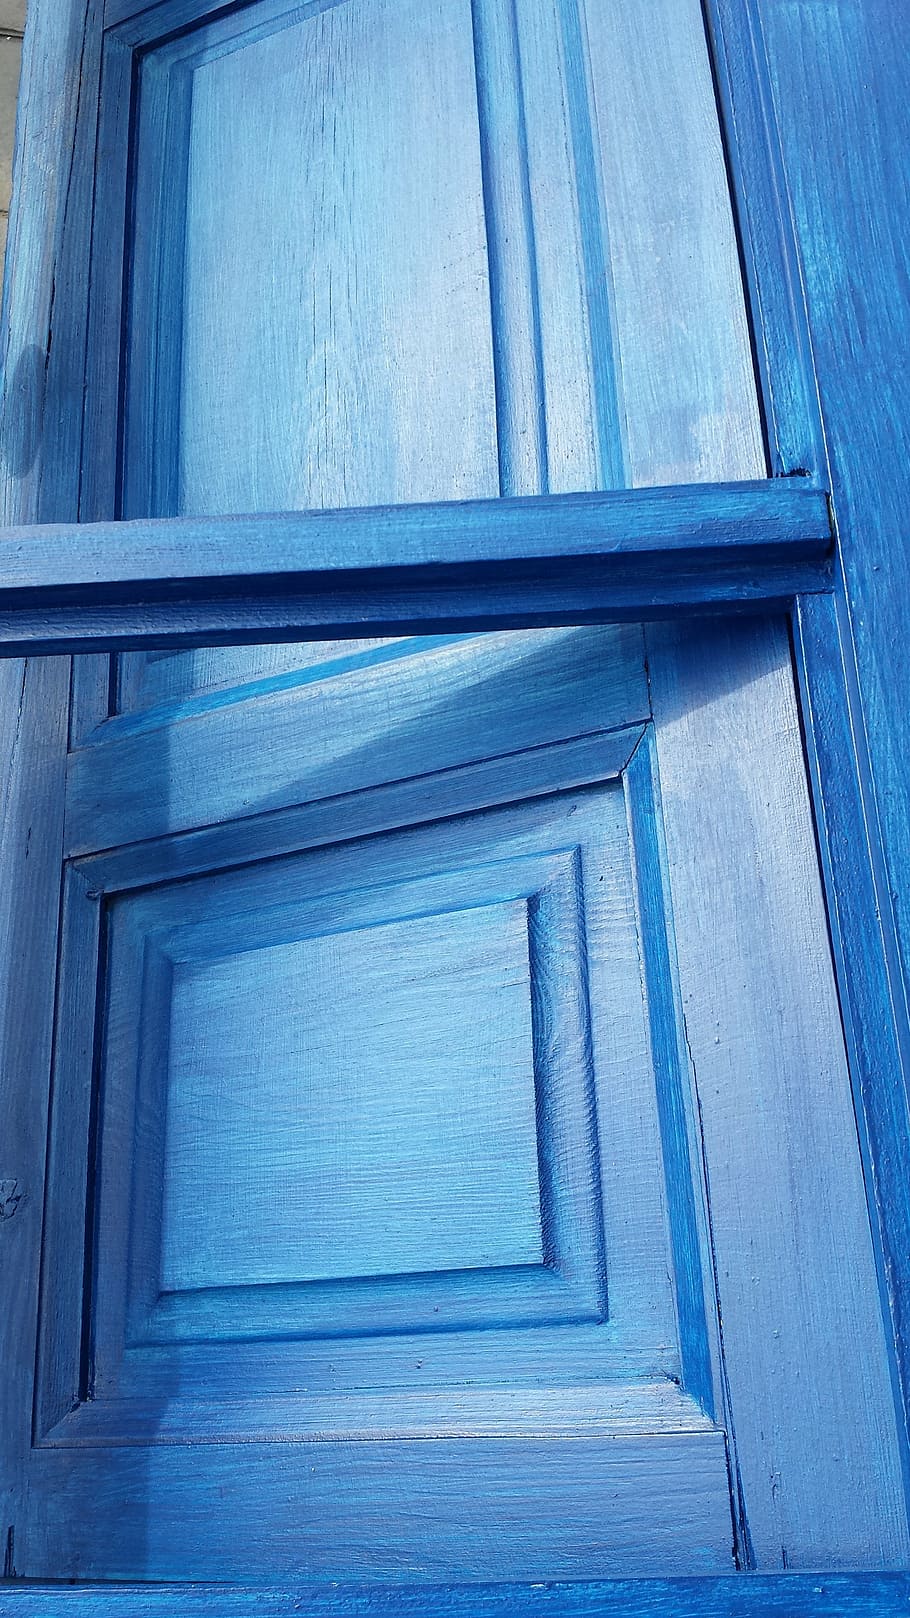 jendela, biru, kayu, sudut, gambar, geometri, nila, tinta, kayu - Bahan, arsitektur